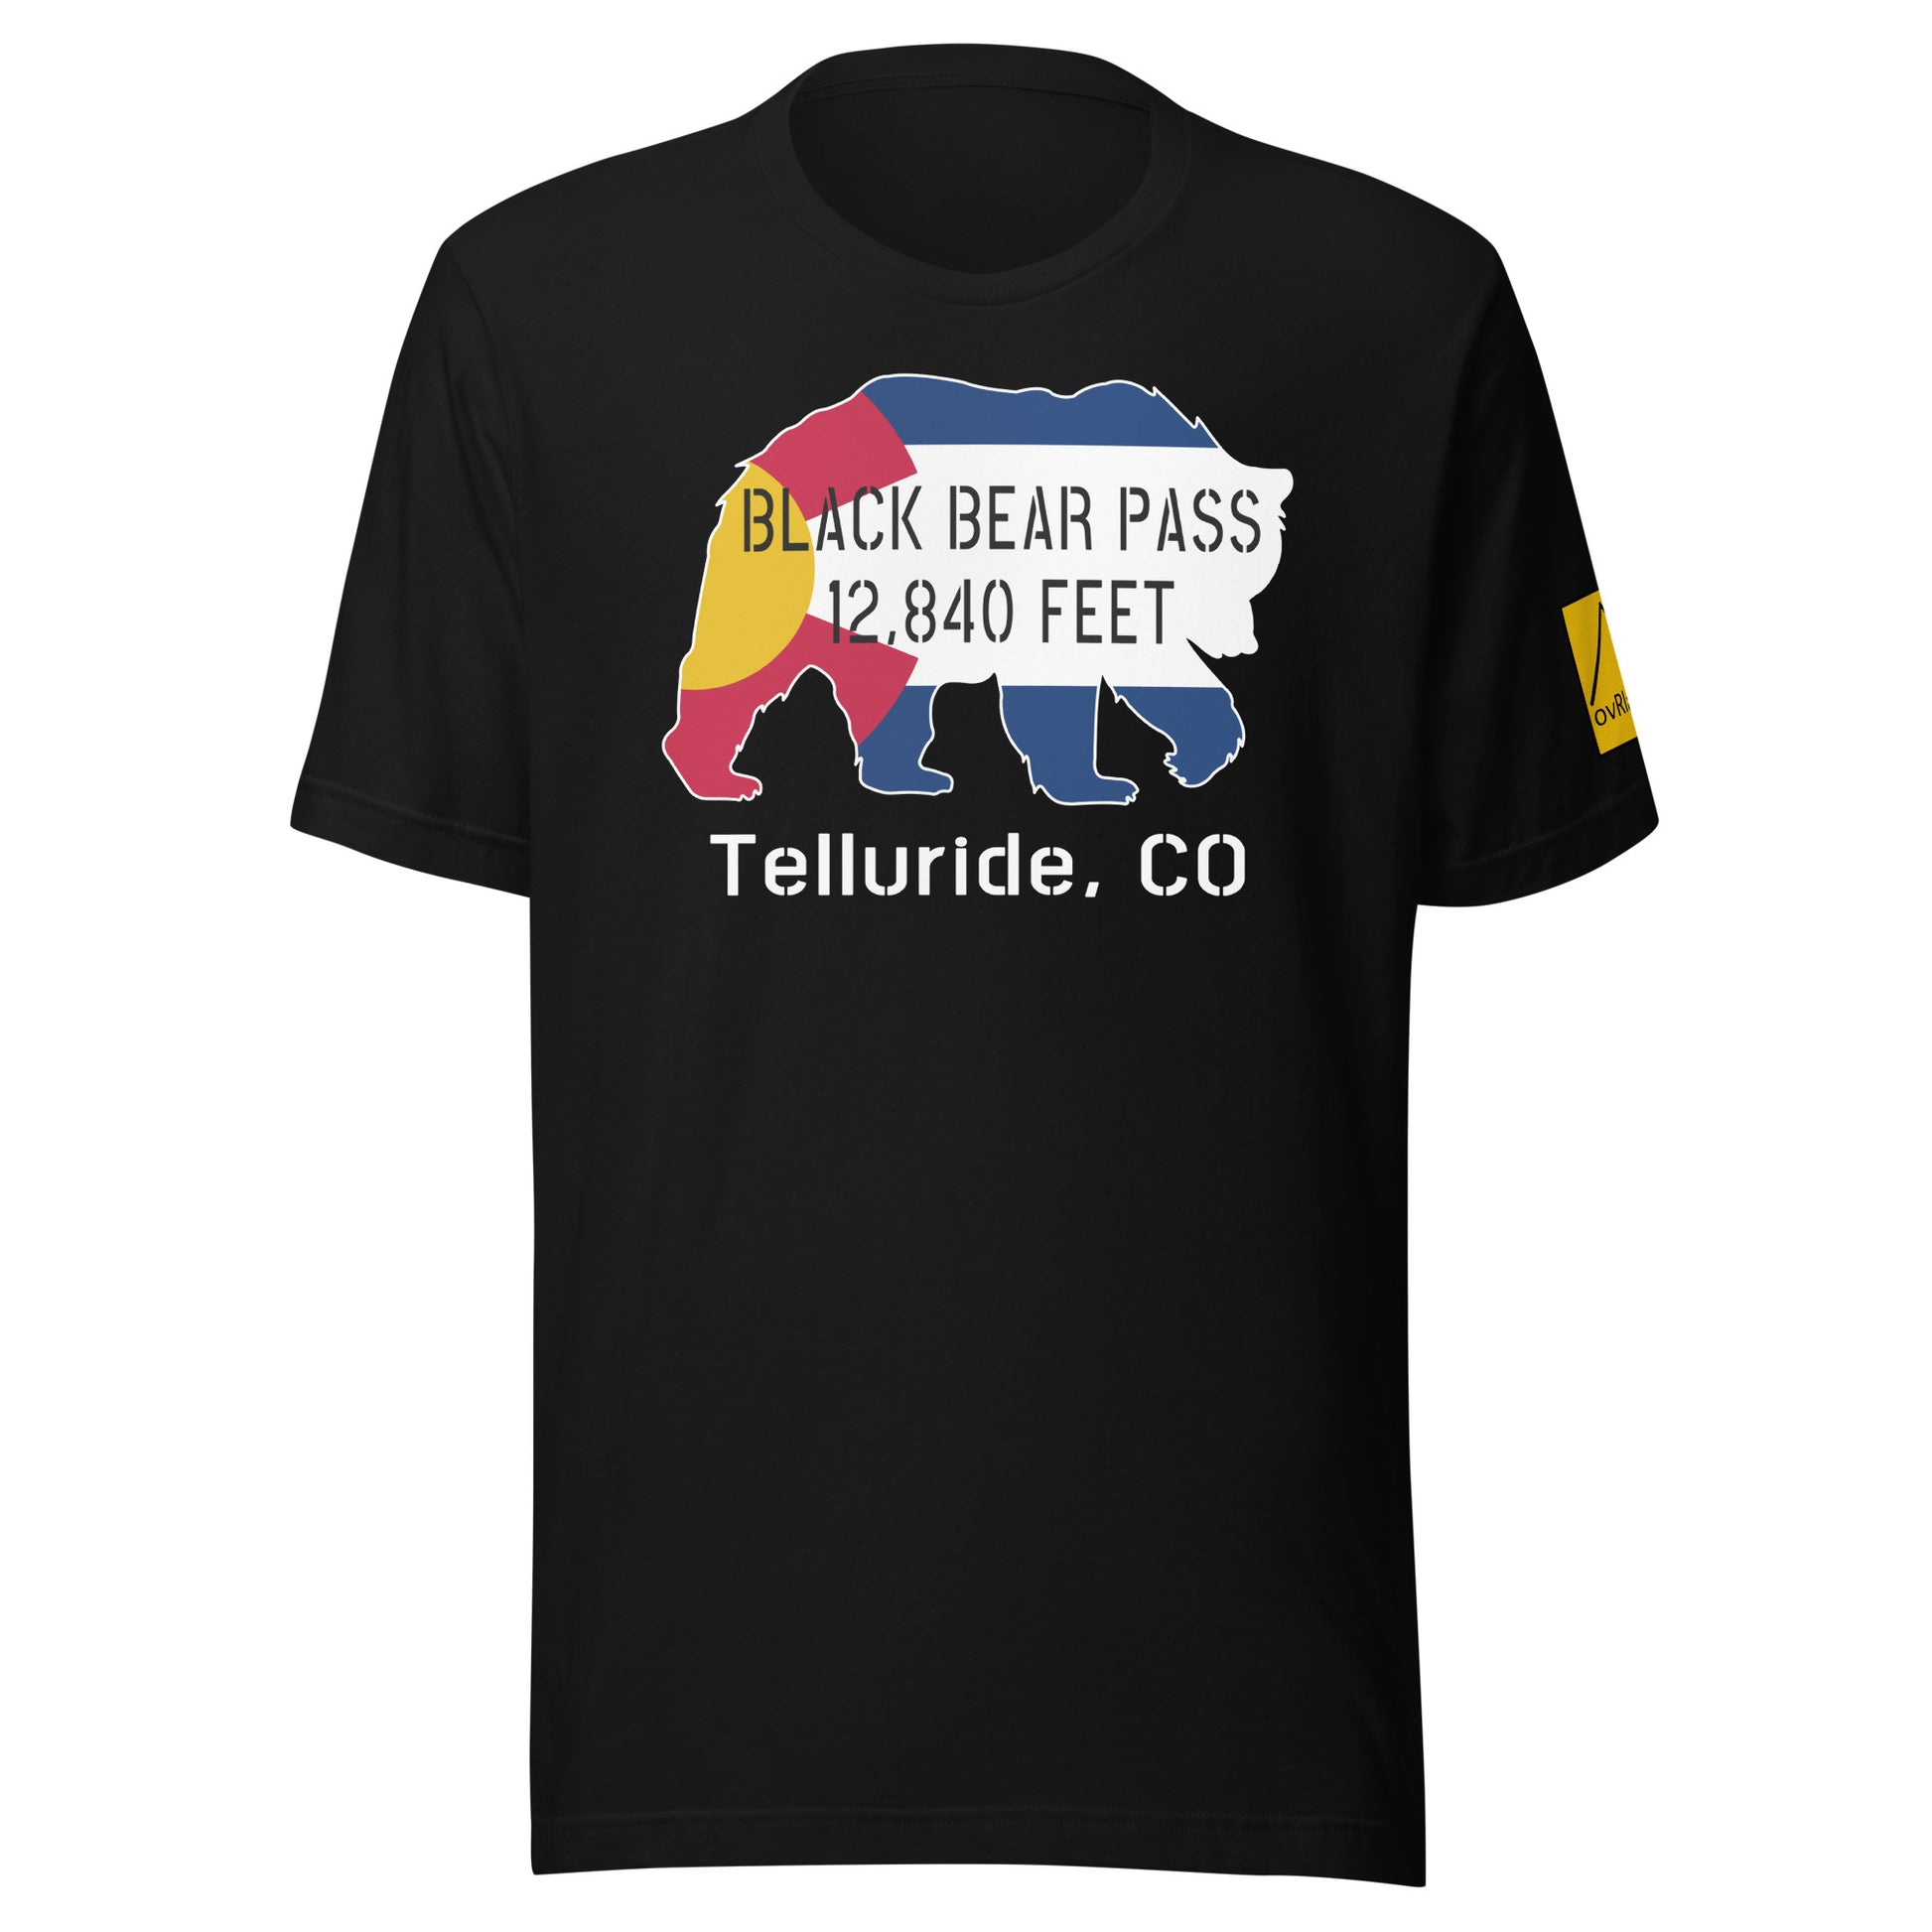 Black Bear Pass, 12840 feet, Telluride, CO. Black T-shirt. overland365.com